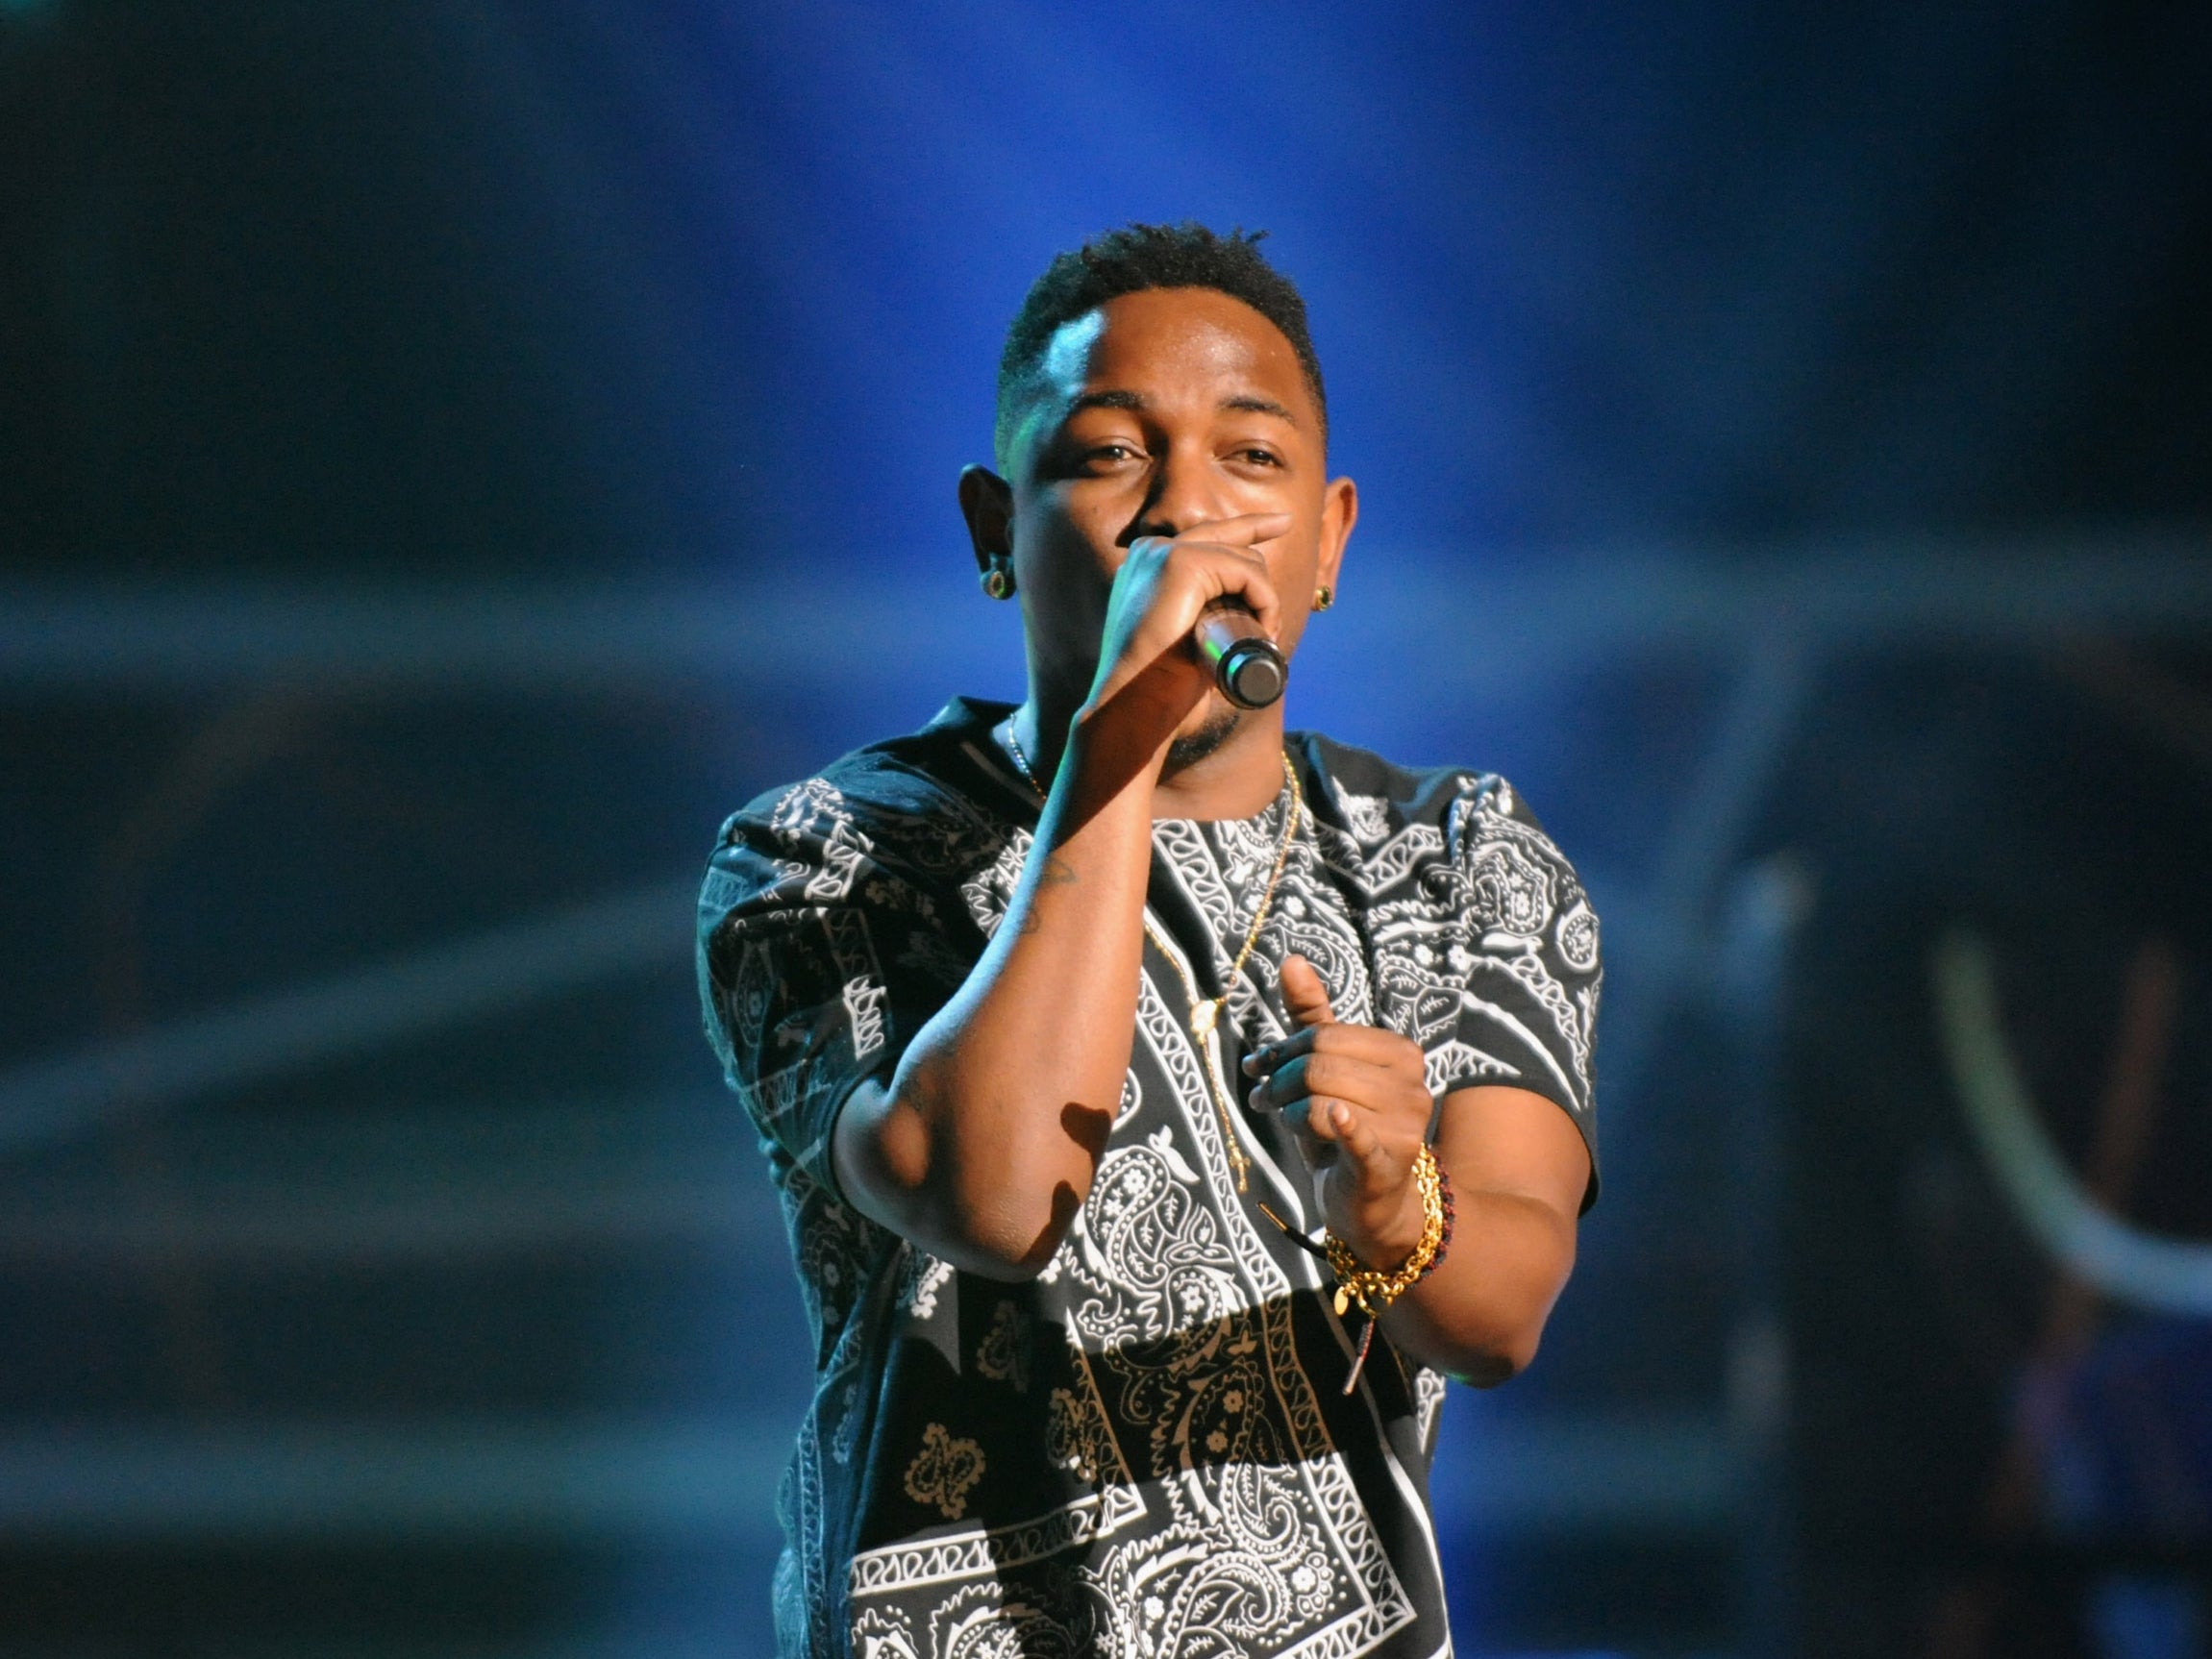 Kendrick Lamar performing at the BET Hip Hop Awards in 2012